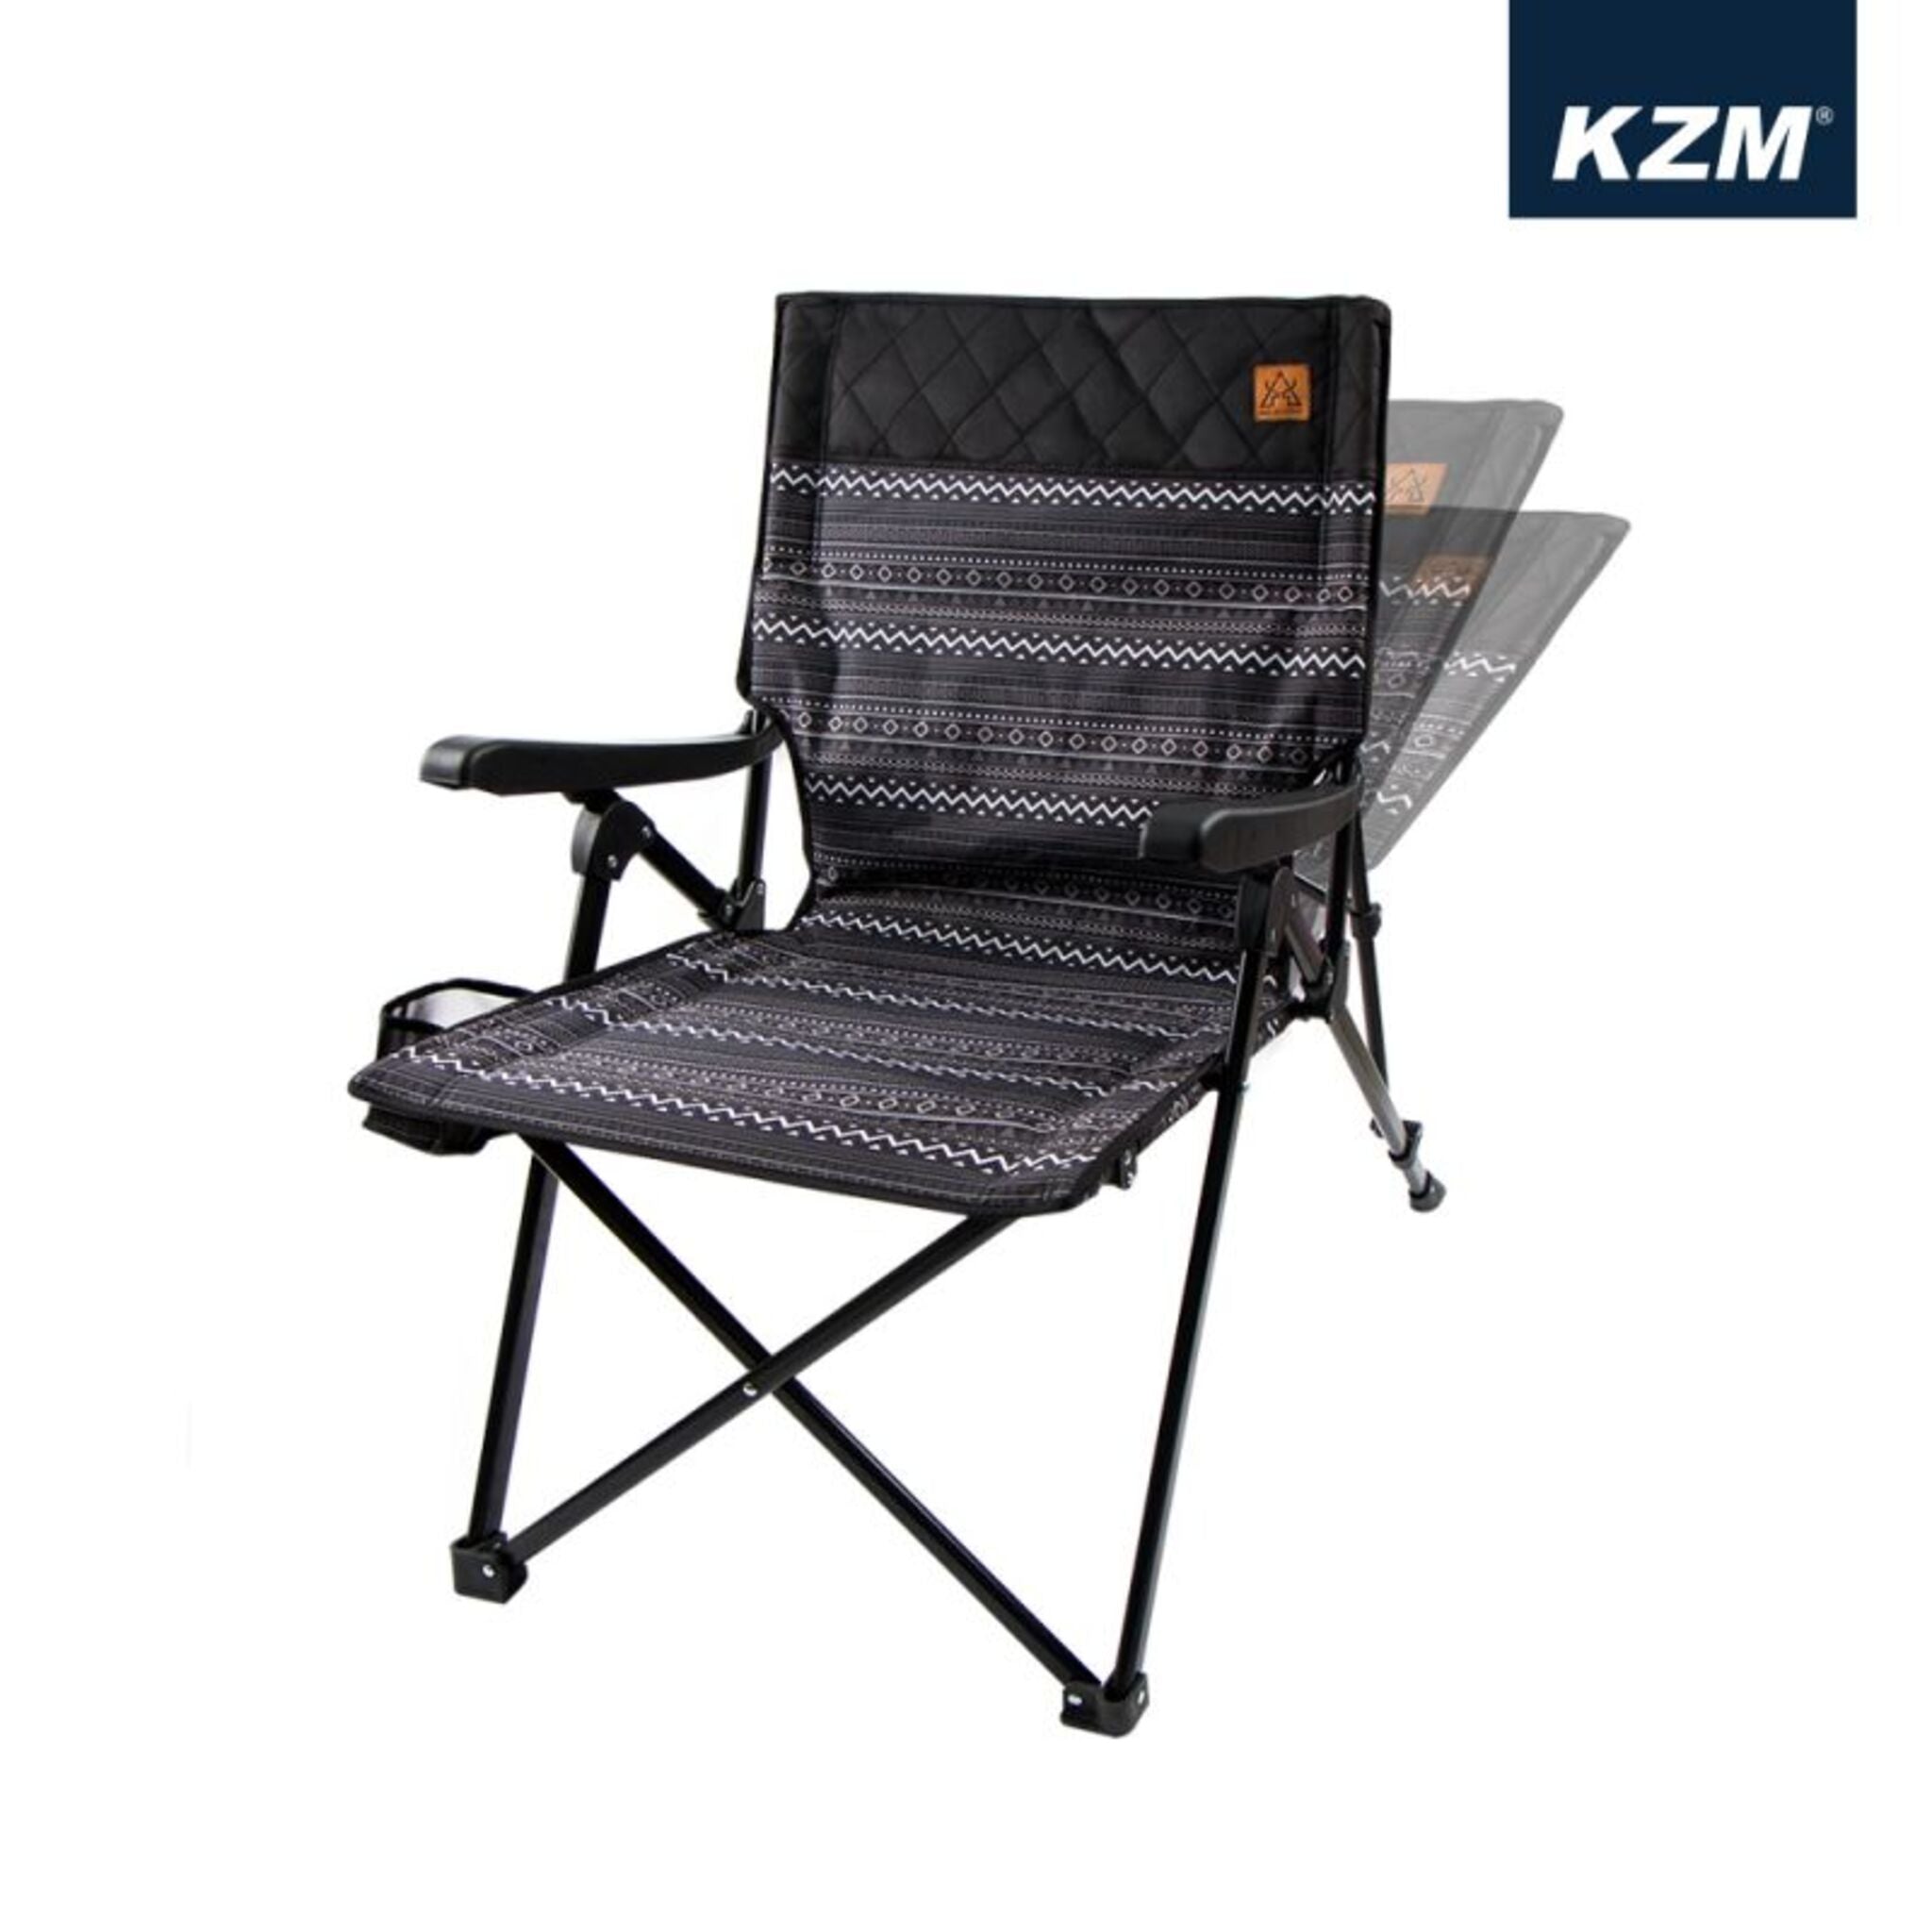 KAZMI KZM 彩繪民族風三段可調折疊椅 K20T1C002